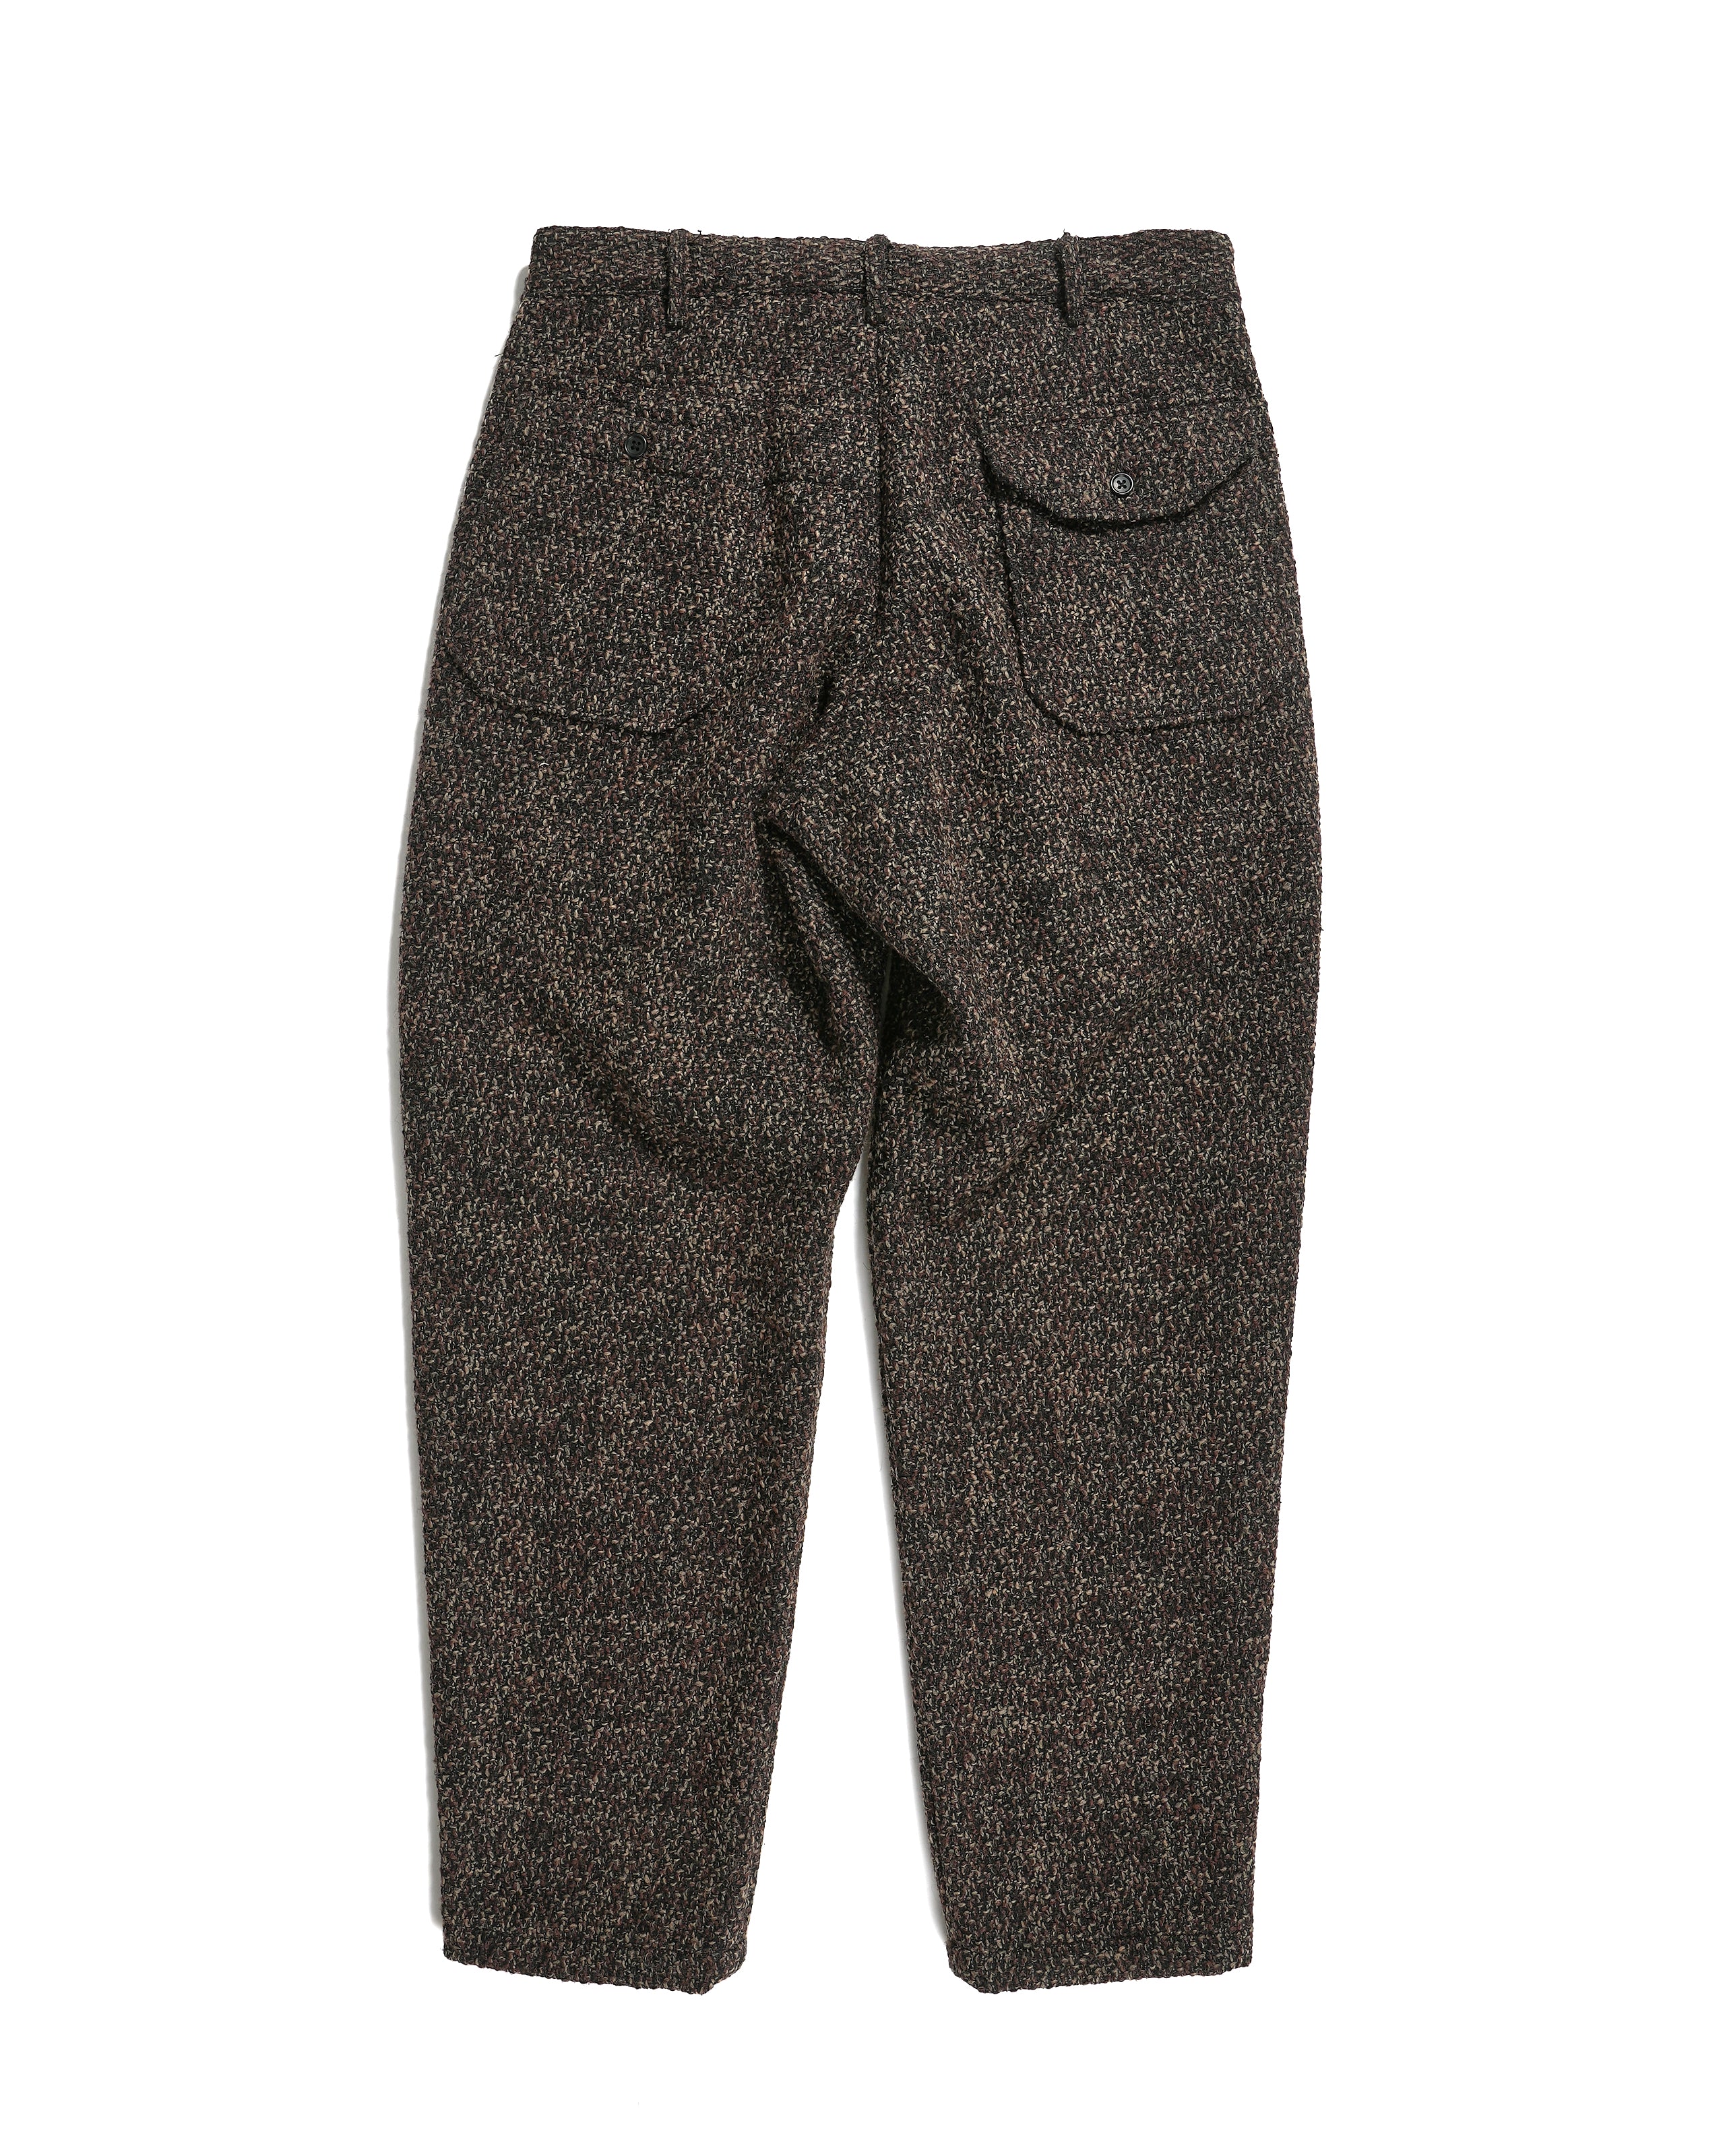 Carlyle Pant - Dk. Brown Polyester Wool Tweed Boucle